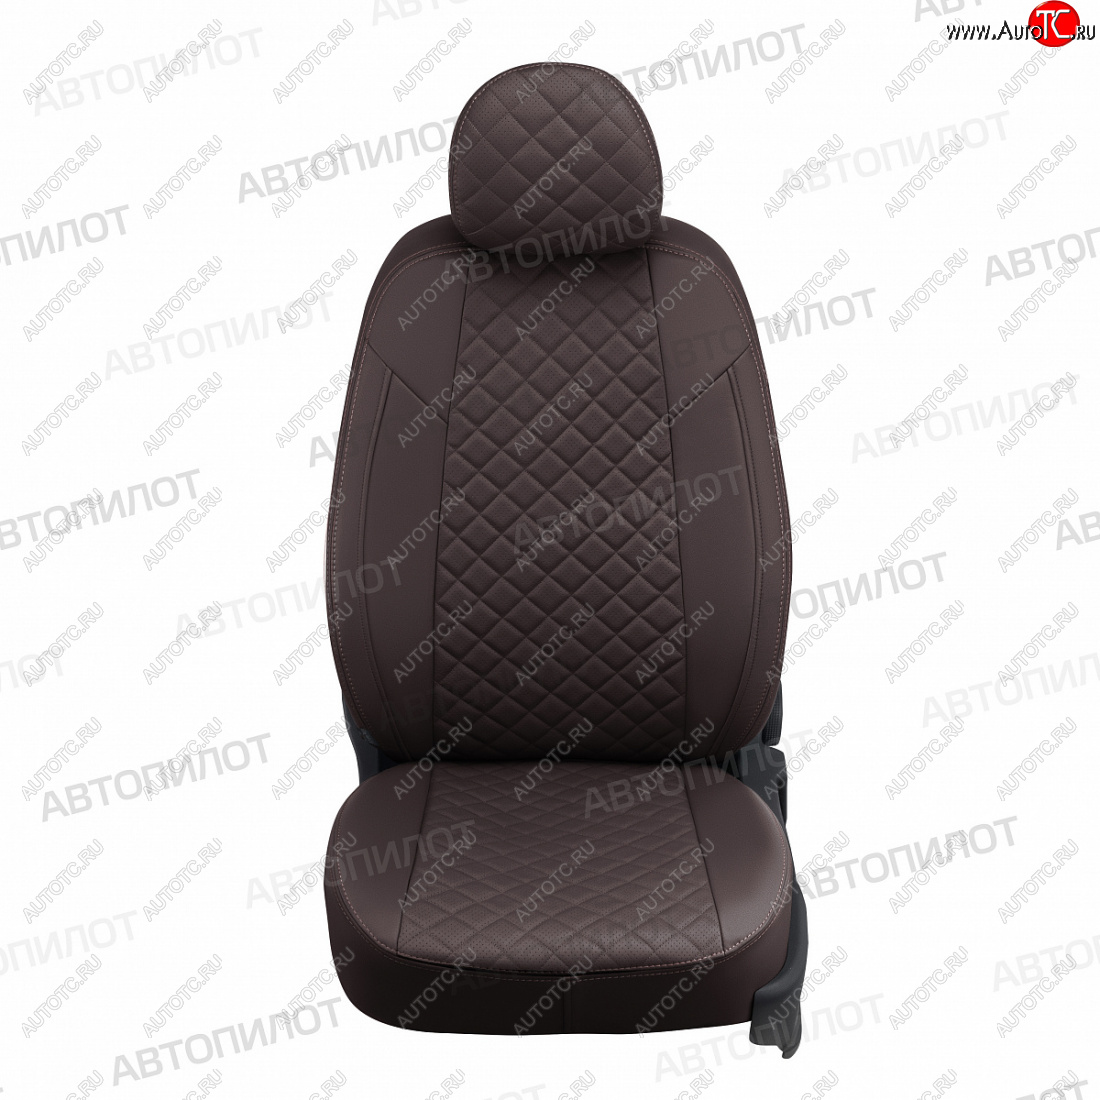 13 999 р. Чехлы сидений (экокожа) Автопилот Ромб  Hyundai Santa Fe  3 DM (2012-2019) (шоколад)